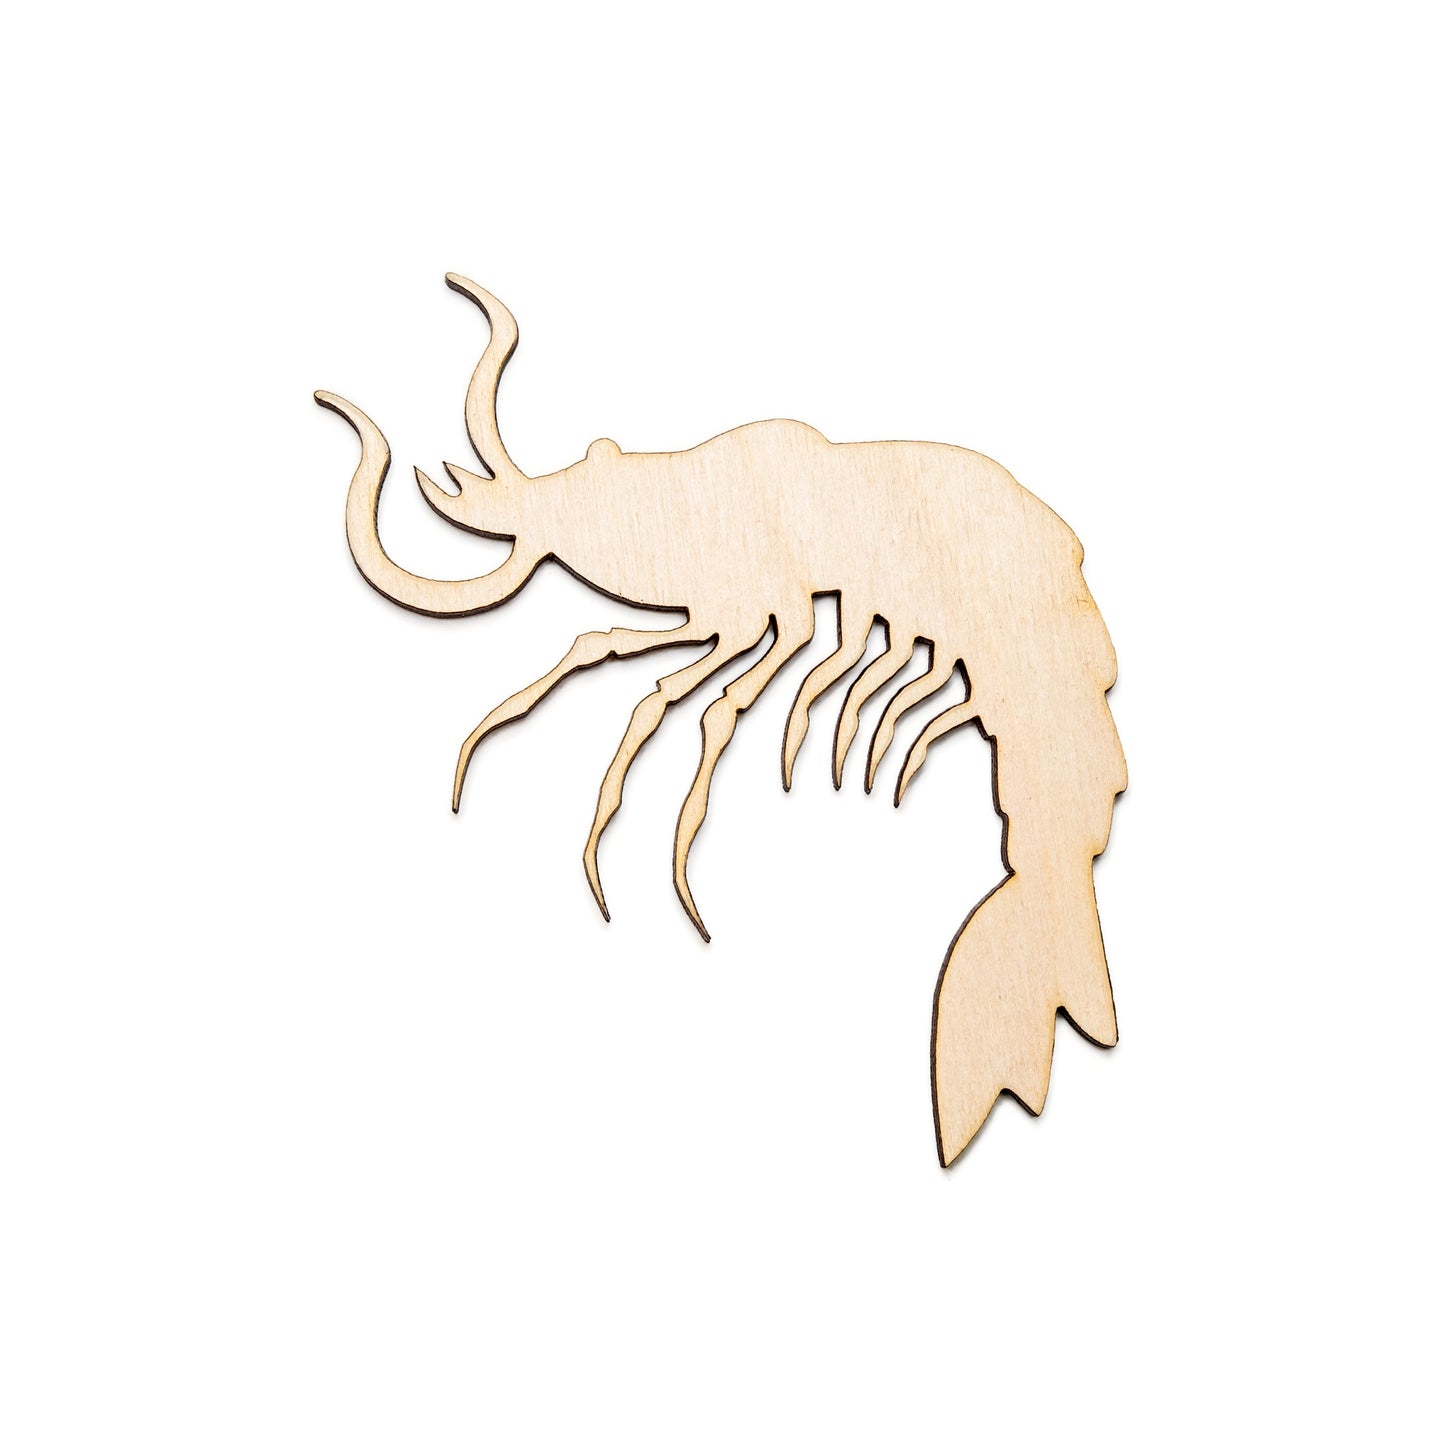 Shrimp-Blank Wood Cutout-Sea Creatures Wood Decor-Shrimp Theme Decor-Various Sizes-Ocean Theme Crafts-DIY-Beach Wood Decor-Wood Crustaceans